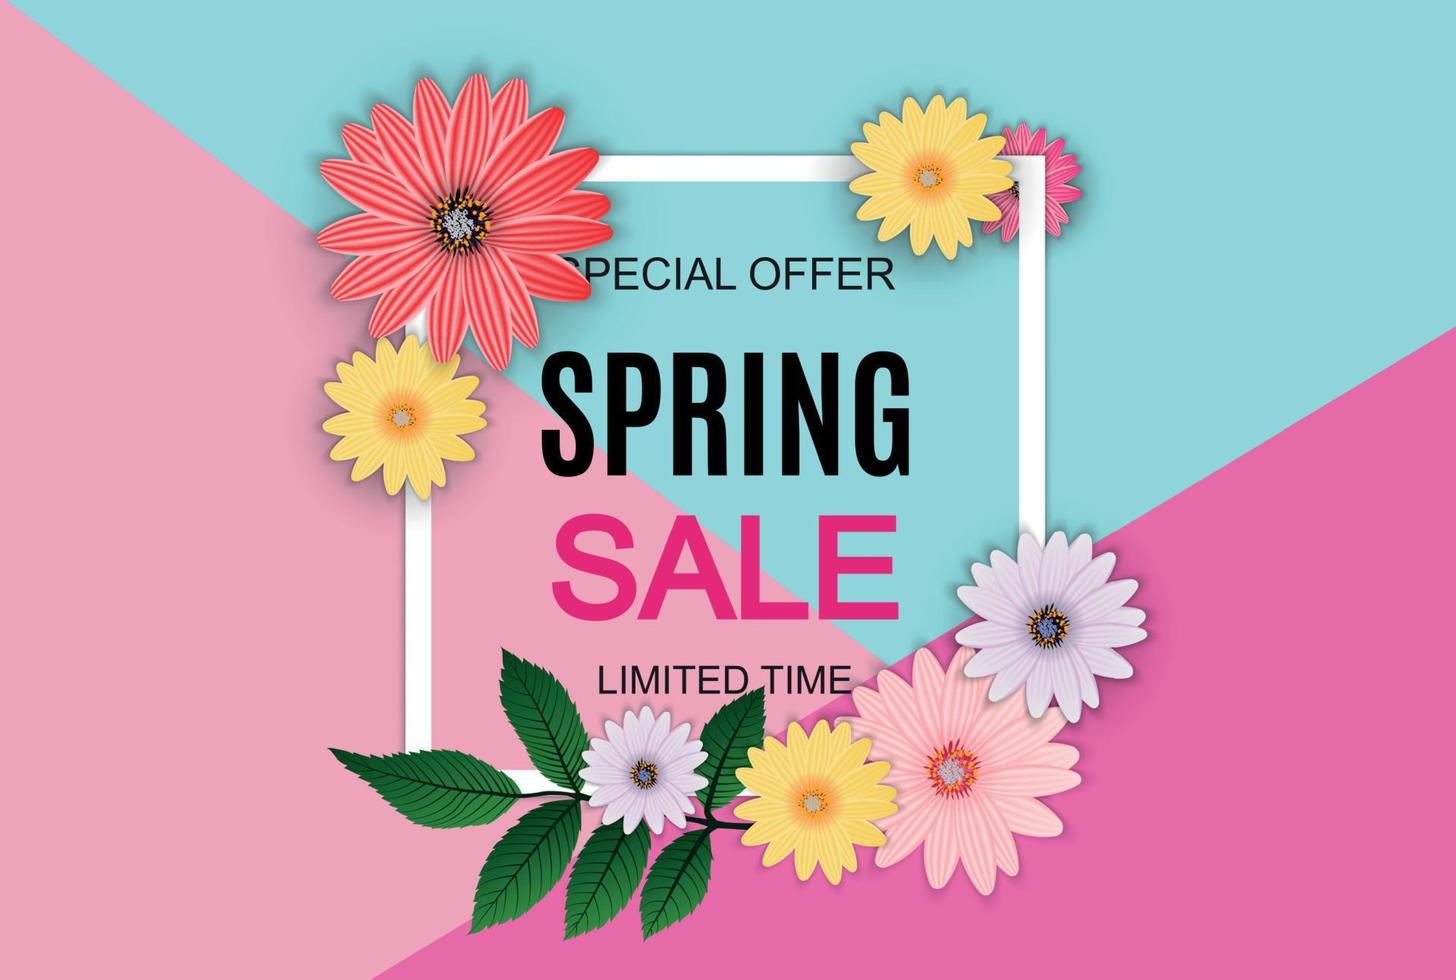 Frühlingsverkauf süßer Hintergrund mit bunten Blumenelementen. Vektor-Illustration vektor